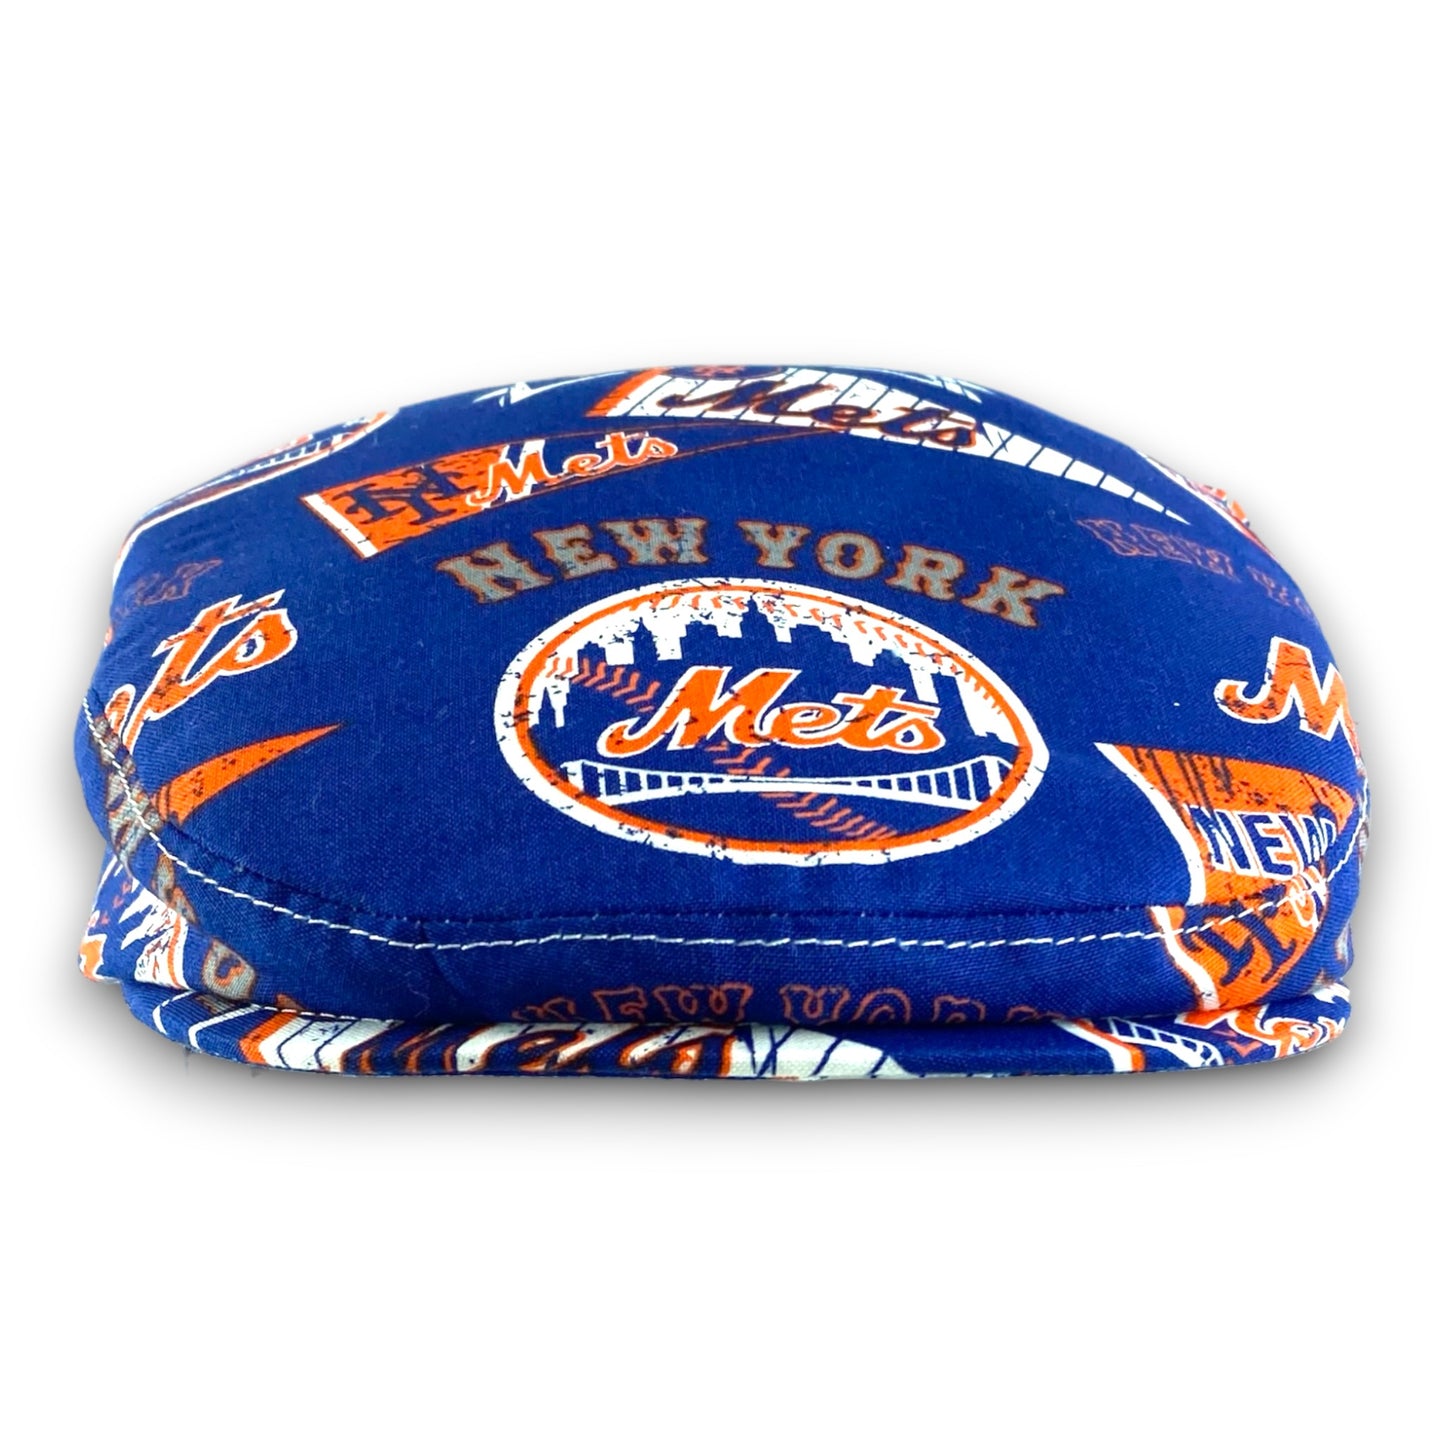 Custom Handmade Jeff Cap in New York Mets Print Fabric